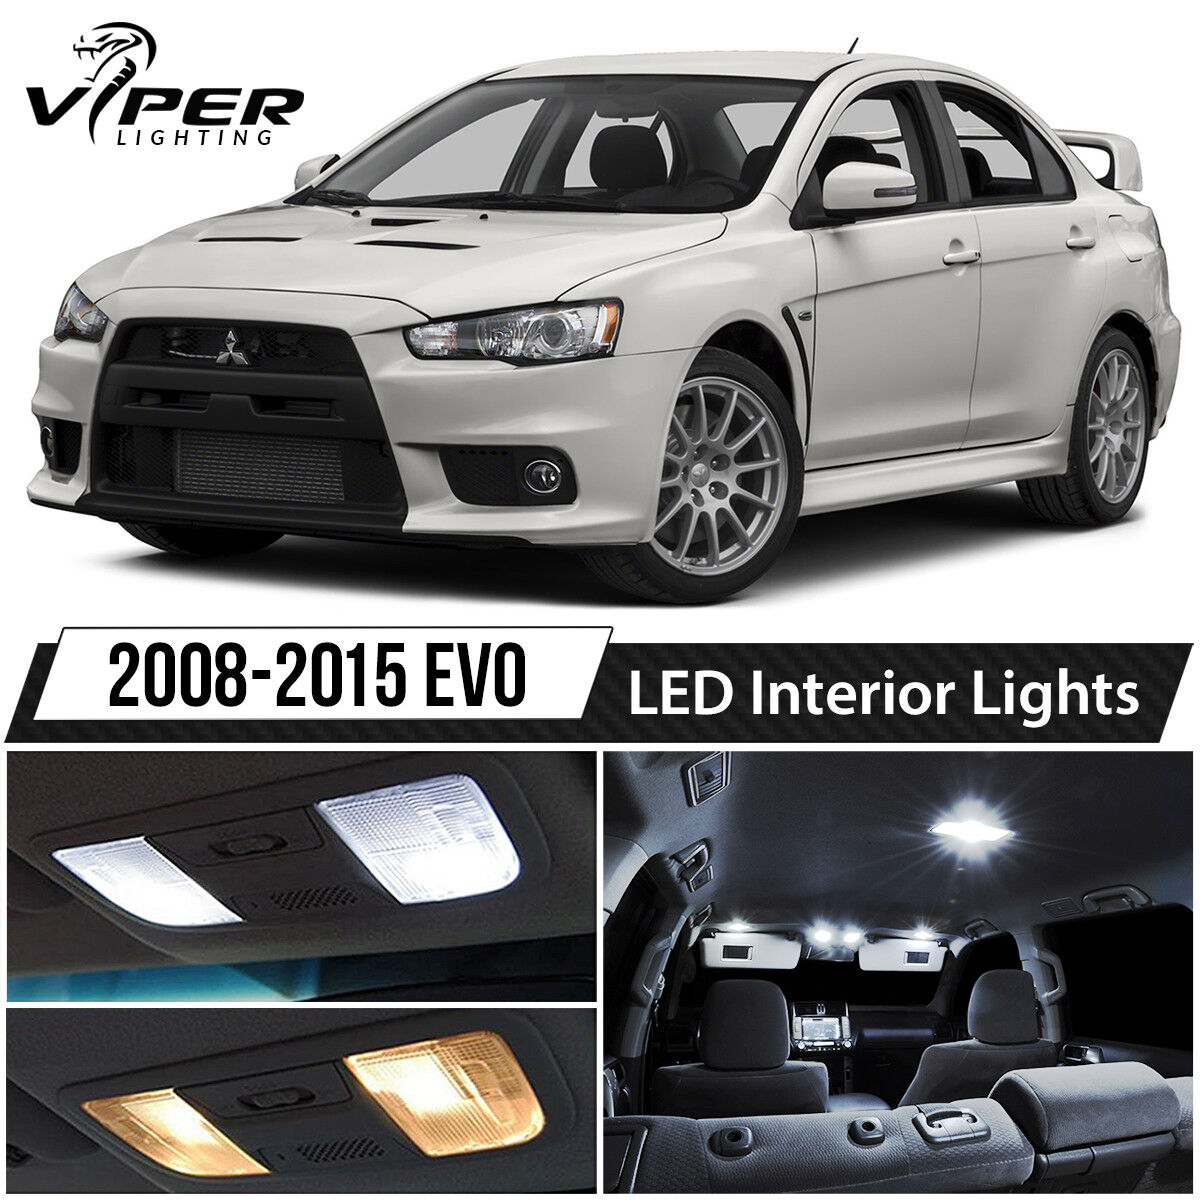 2008-2015 Mitsubishi Lancer Evo X White LED Interior Lights Package Kit